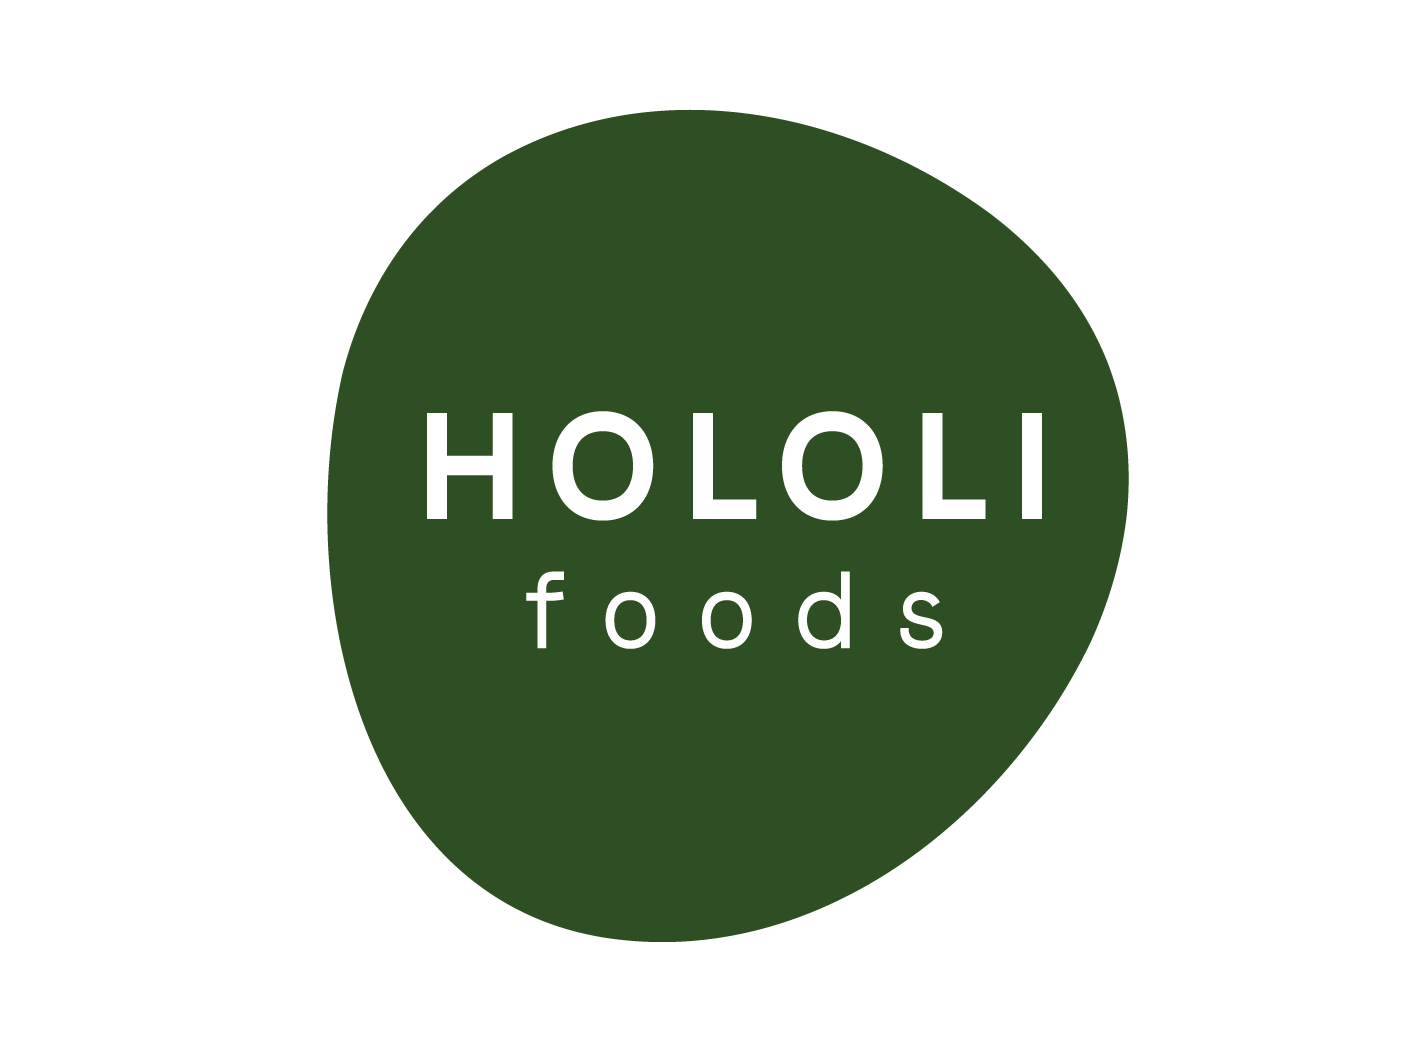 Hololi-foods-finals.png